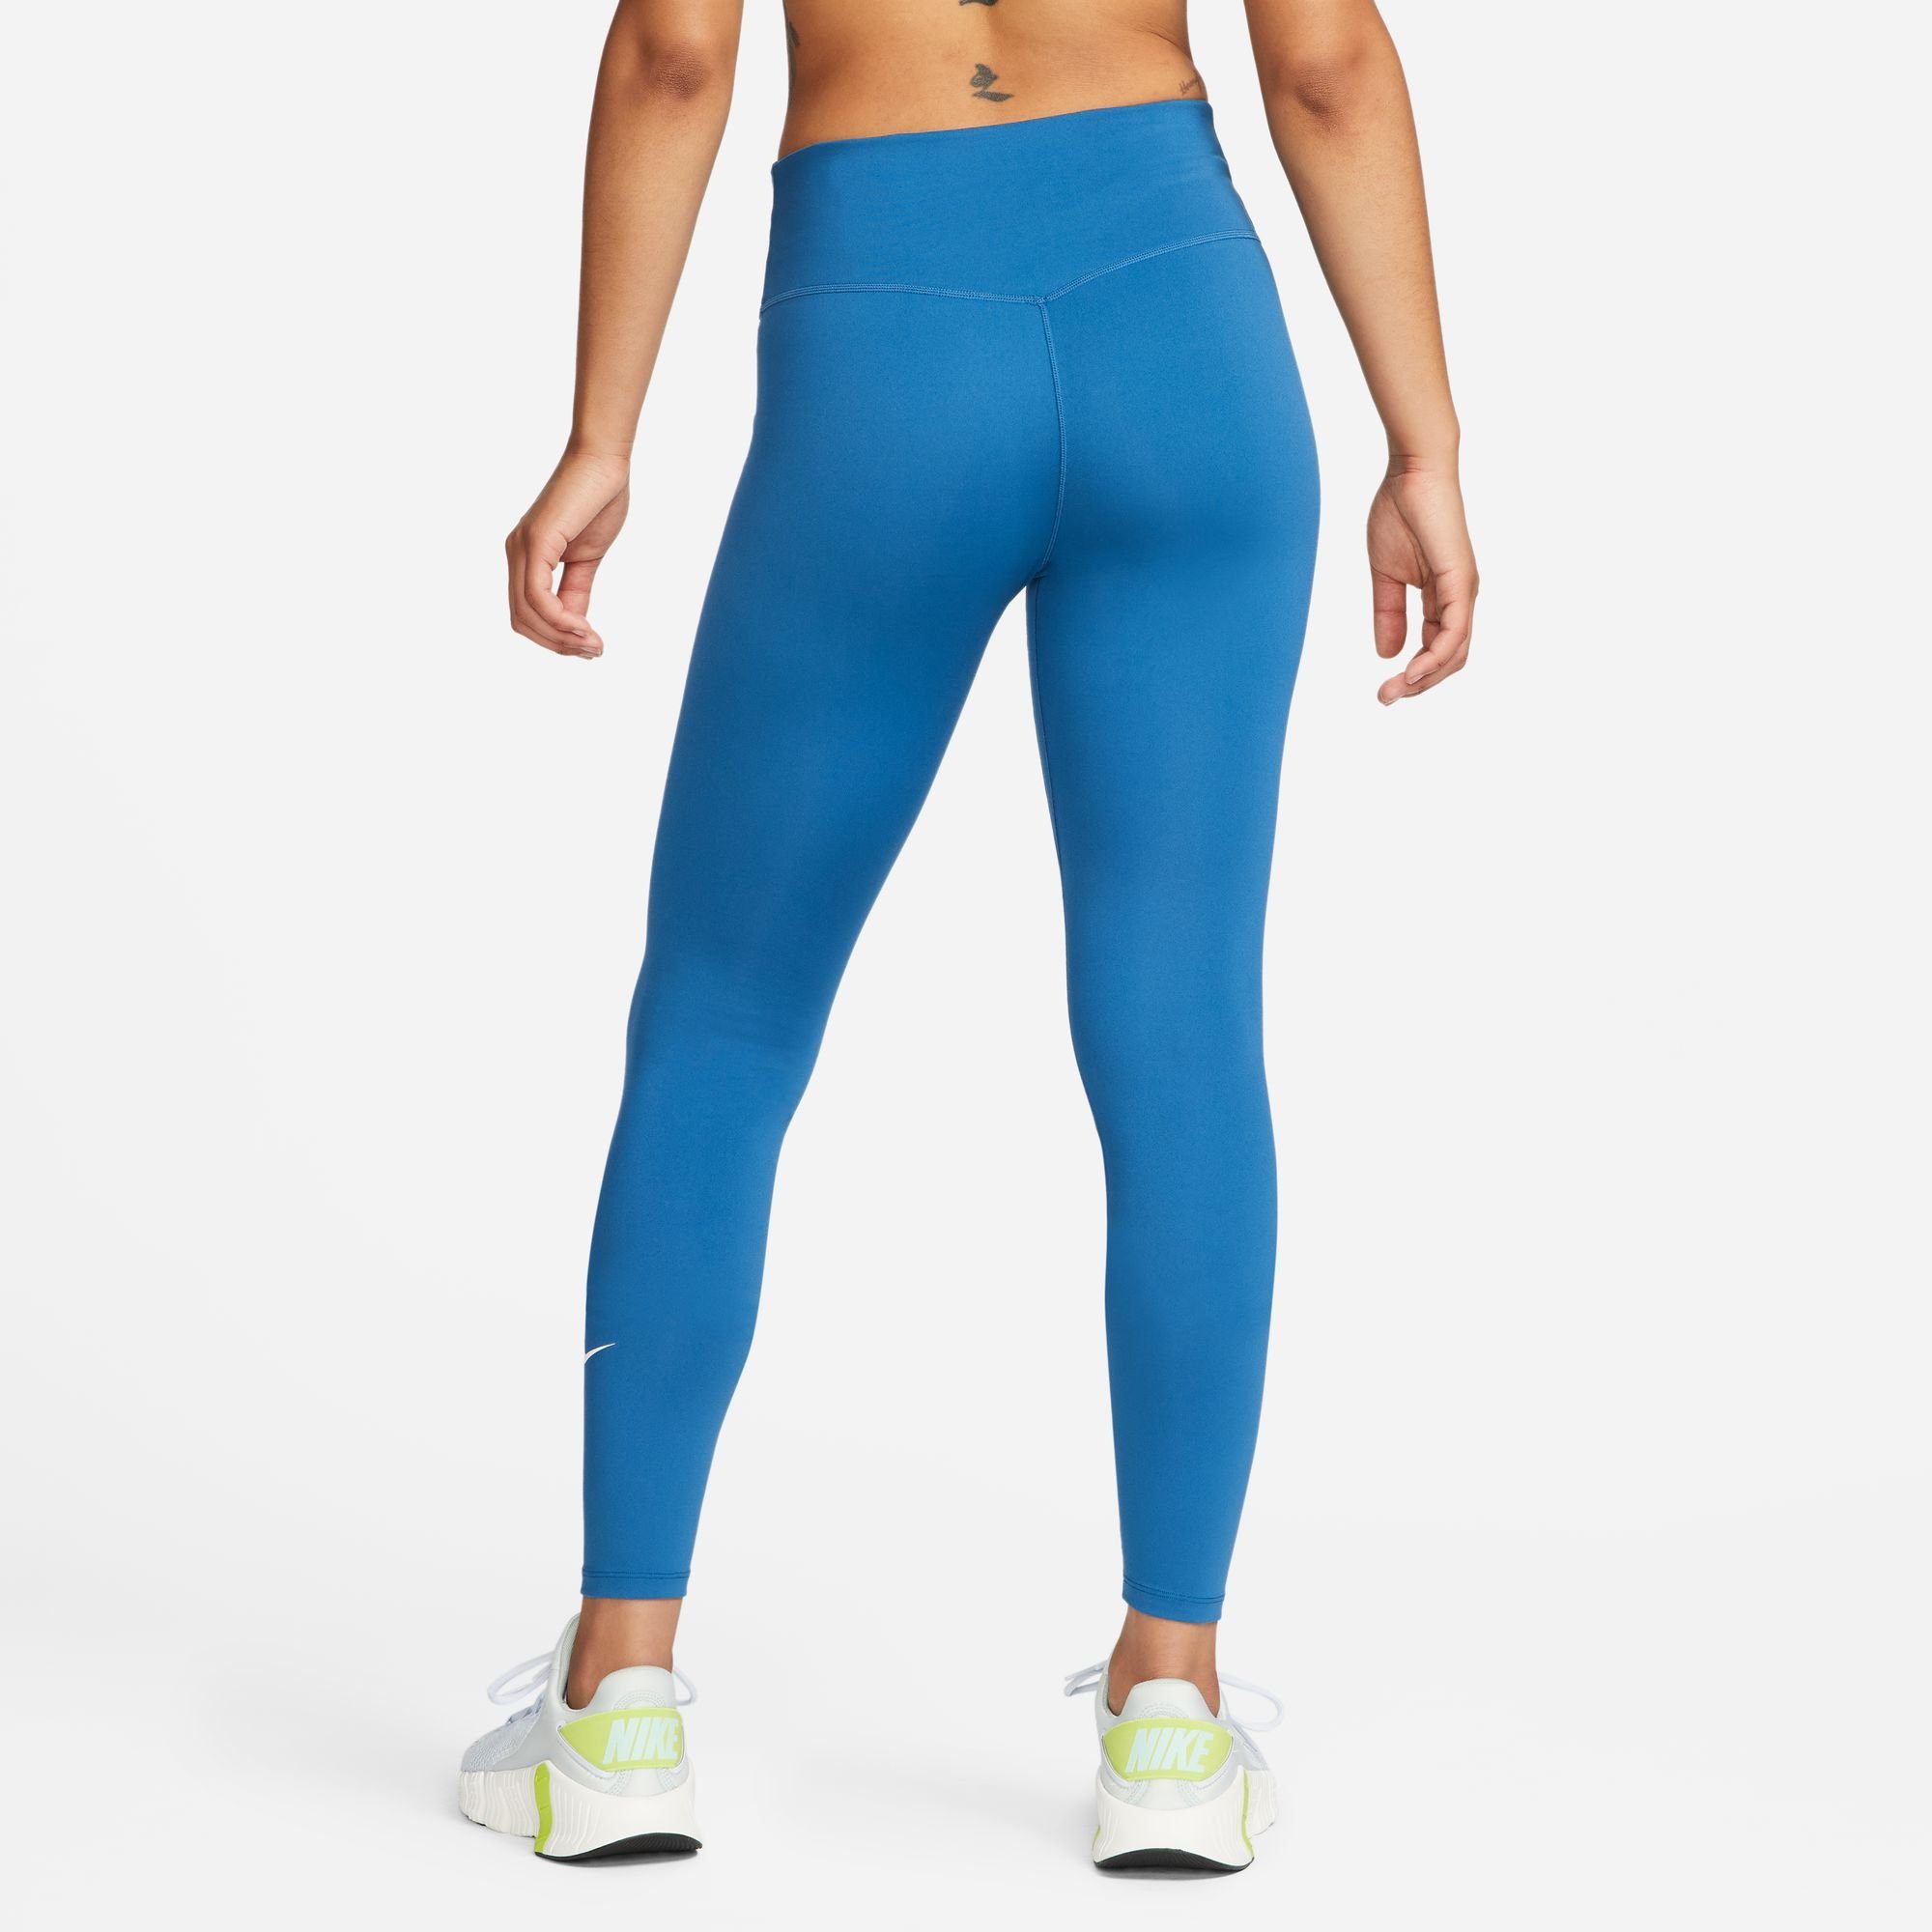 ONE INDUSTRIAL Trainingstights BLUE/WHITE MID-RISE Nike WOMEN'S LEGGINGS